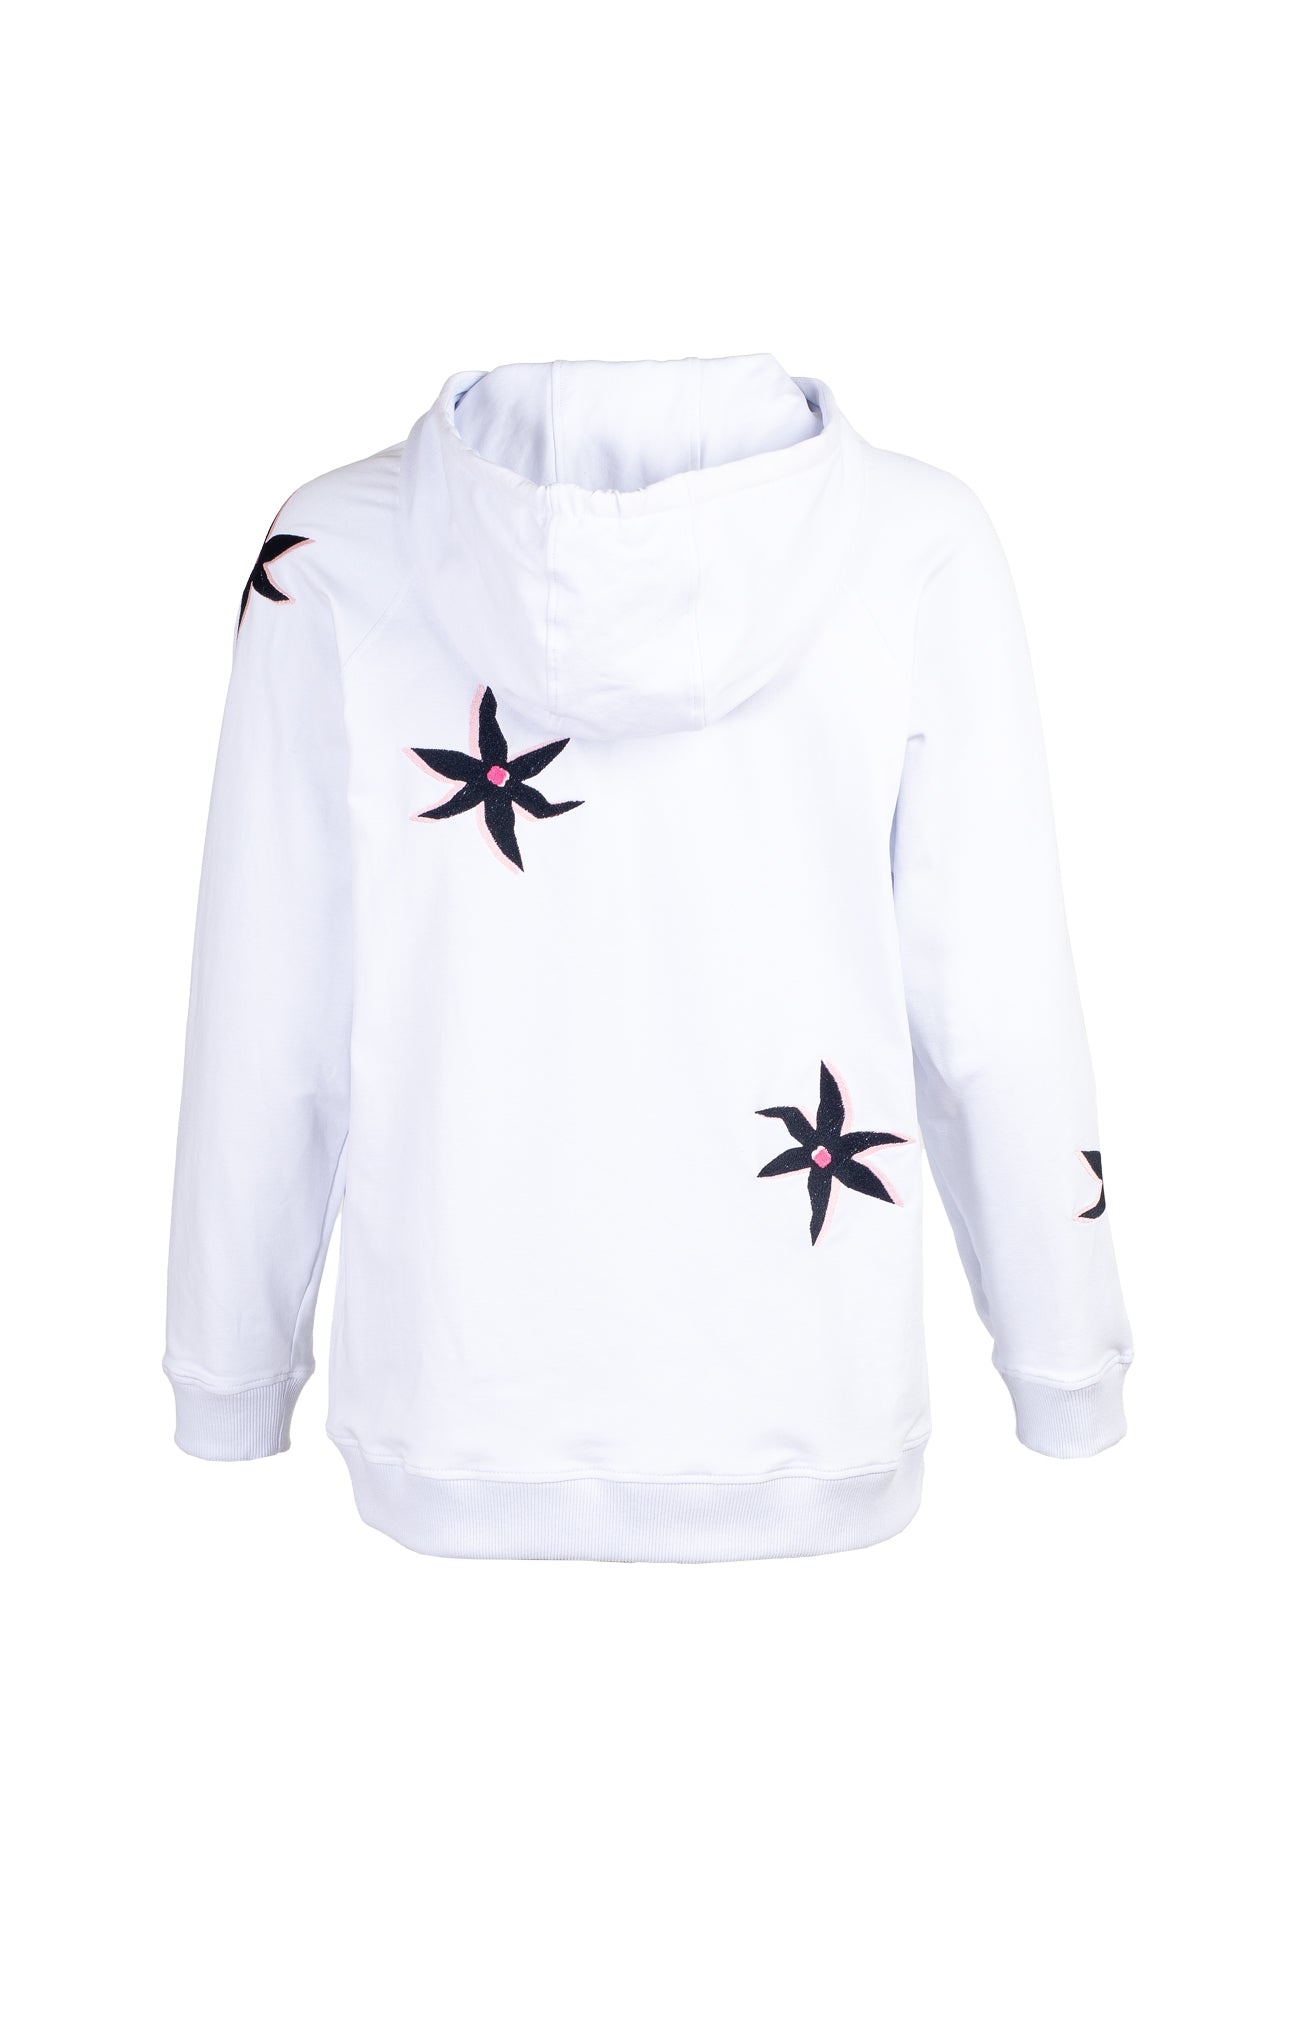 KEKES Embroidered Sweatshirt 'Starflower White'